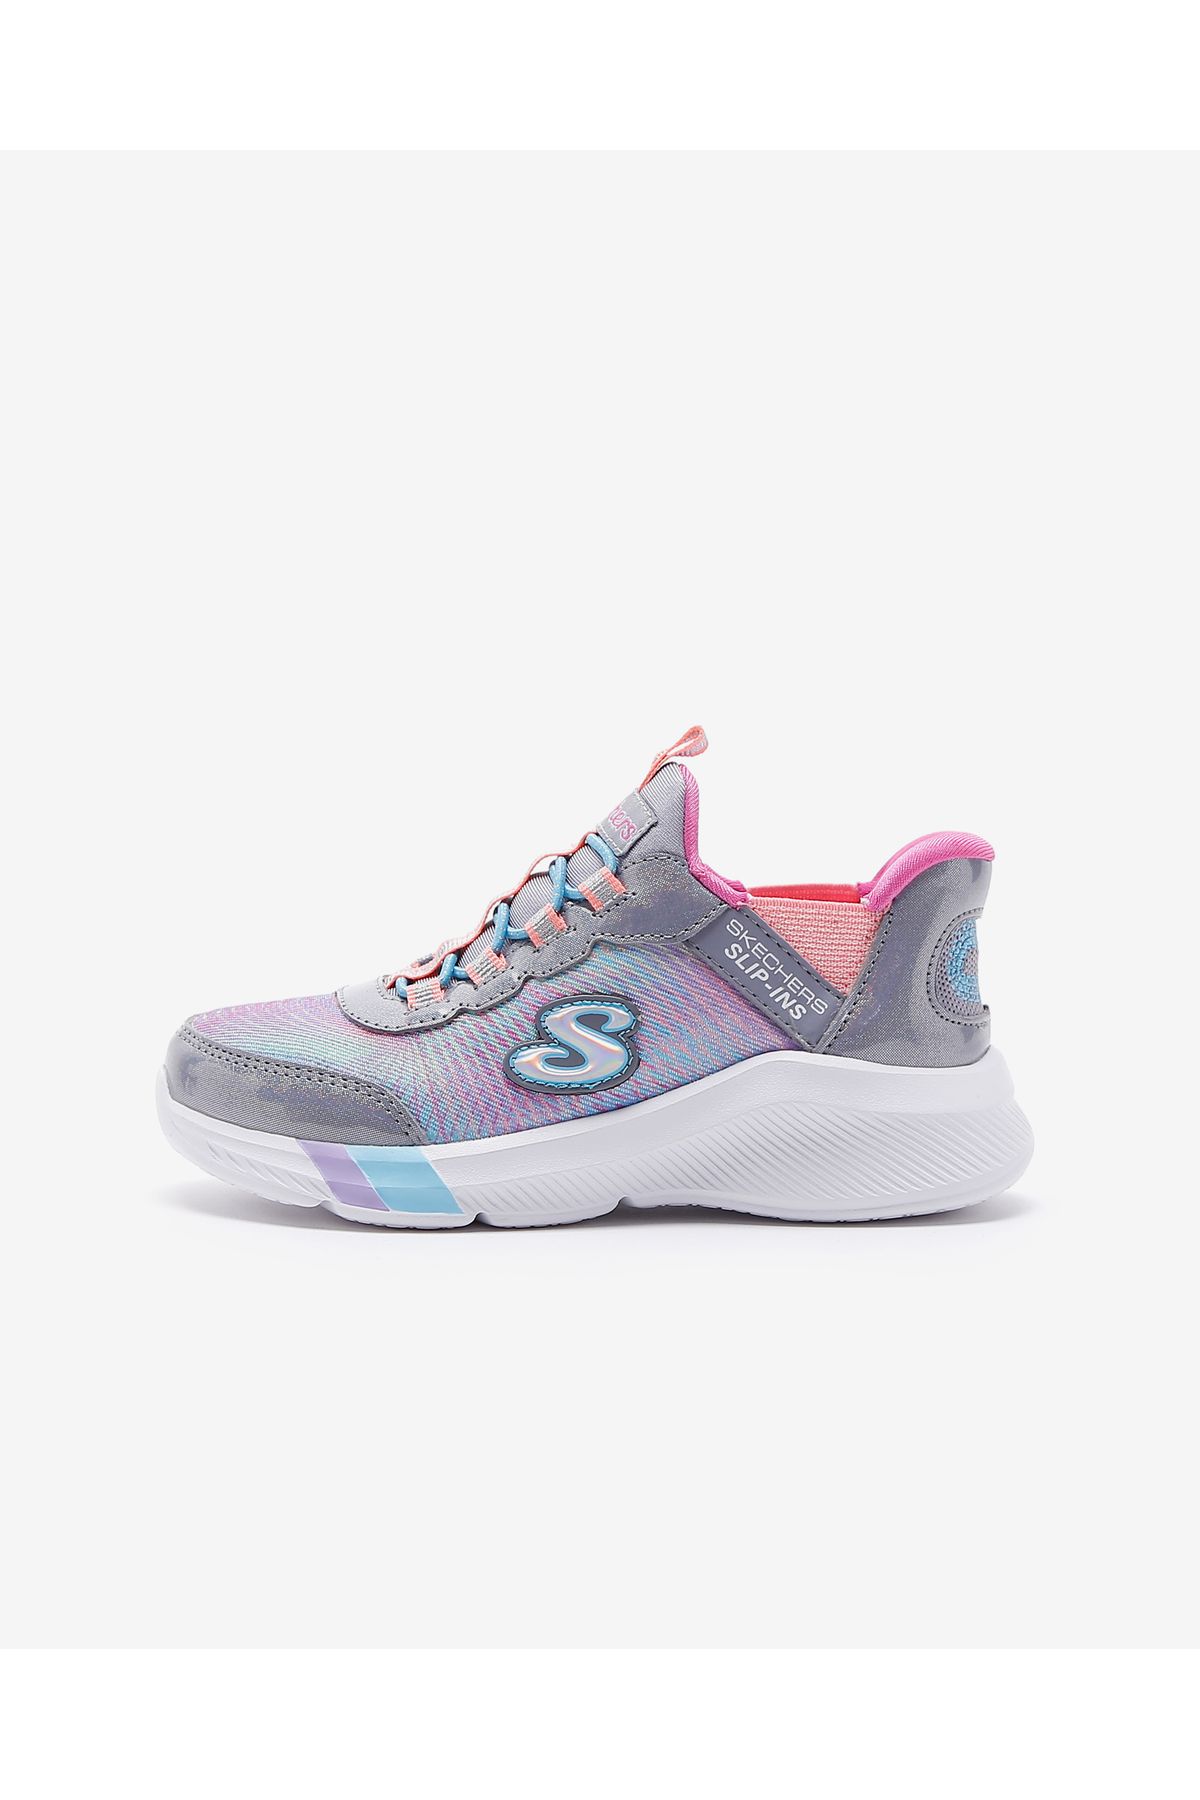 Skechers Dreamy Lites - Colorful Prism - Slip-ıns Büyük Kız Çocuk Gri Spor Ayakkabı 303514l Gymt